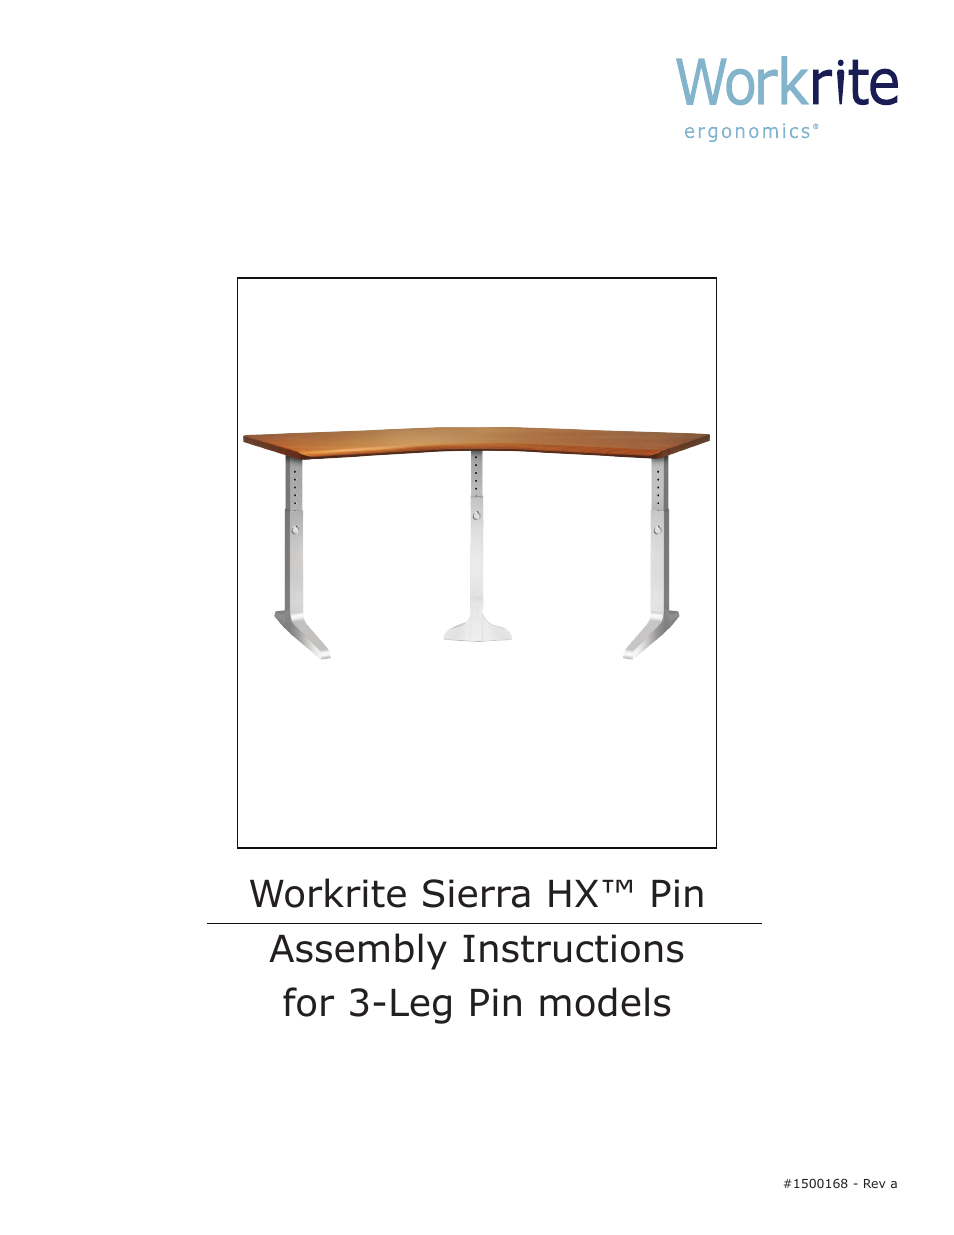 Sierra HX Pin Assembly Instructions for 3-Leg Pin models